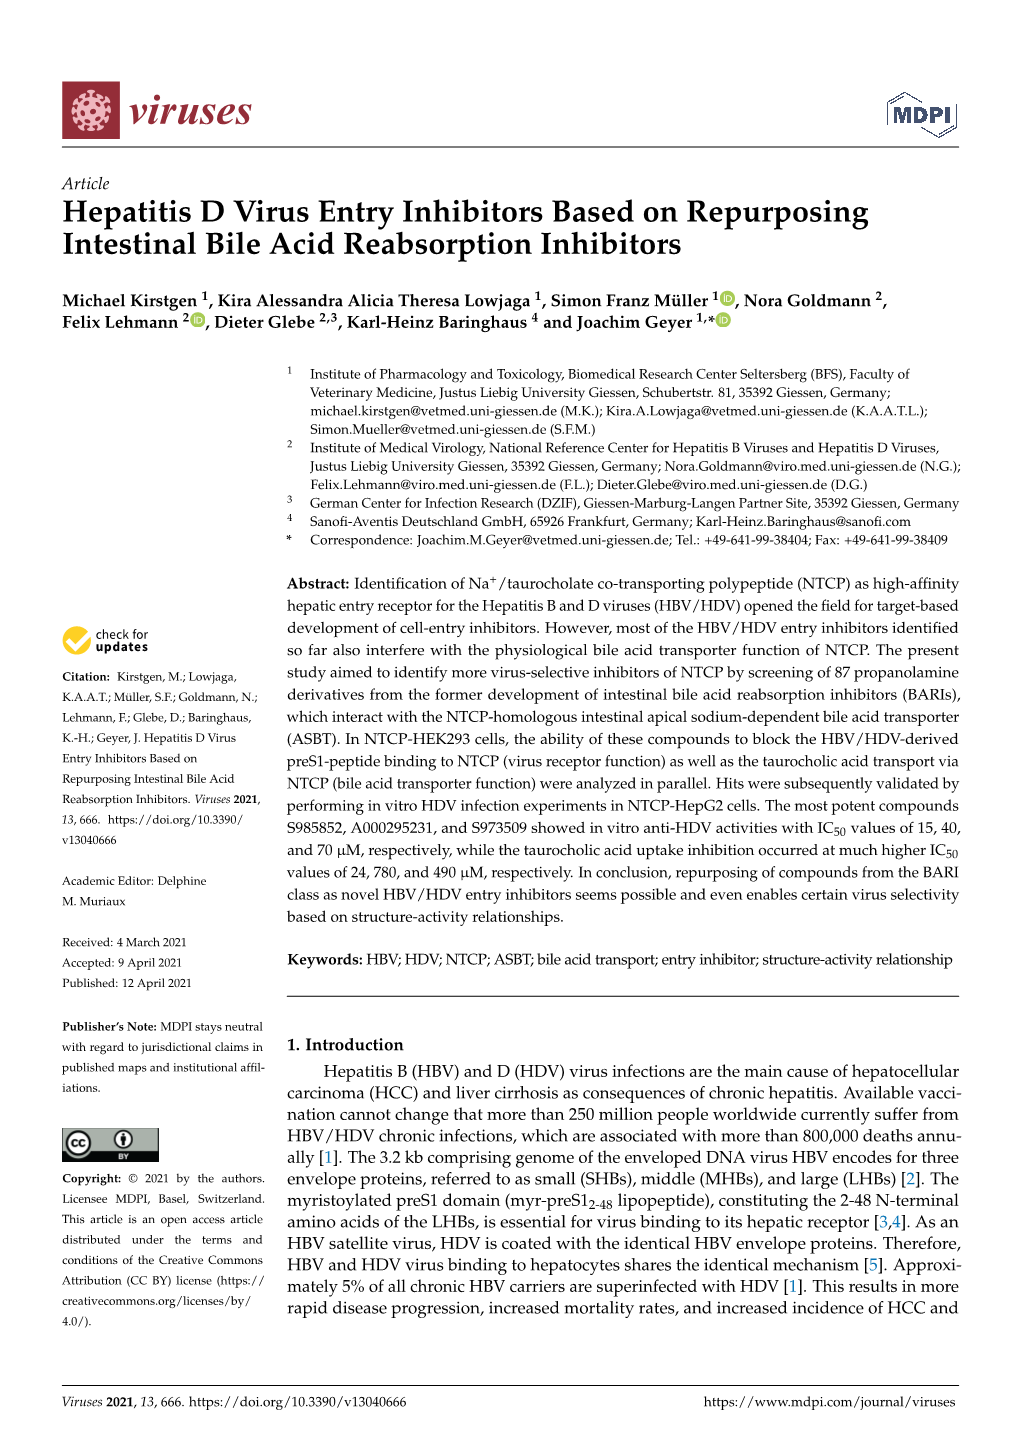 Hepatitis D Virus Entry Inhibitors Based on Repurposing Intestinal Bile Acid Reabsorption Inhibitors